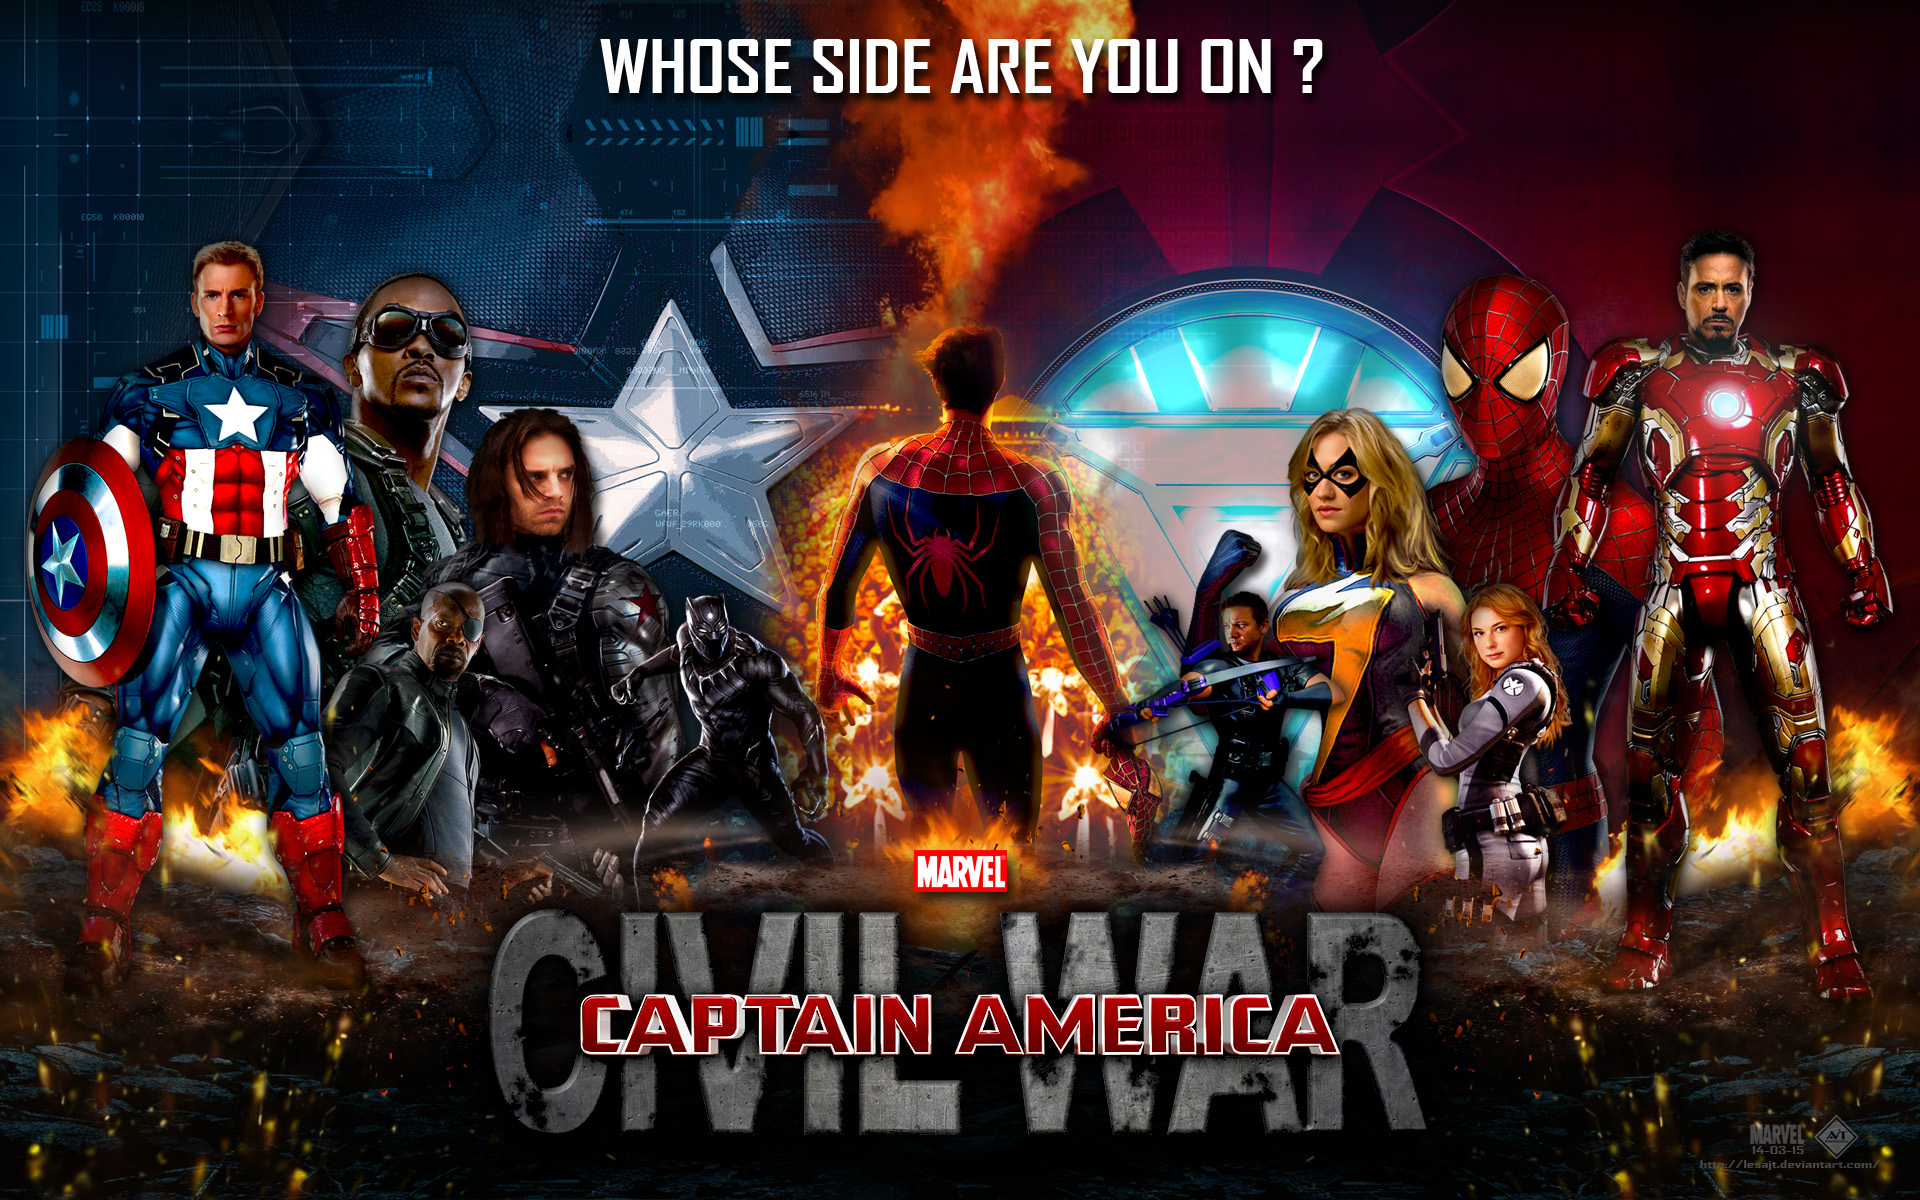 Civil-War-Poster